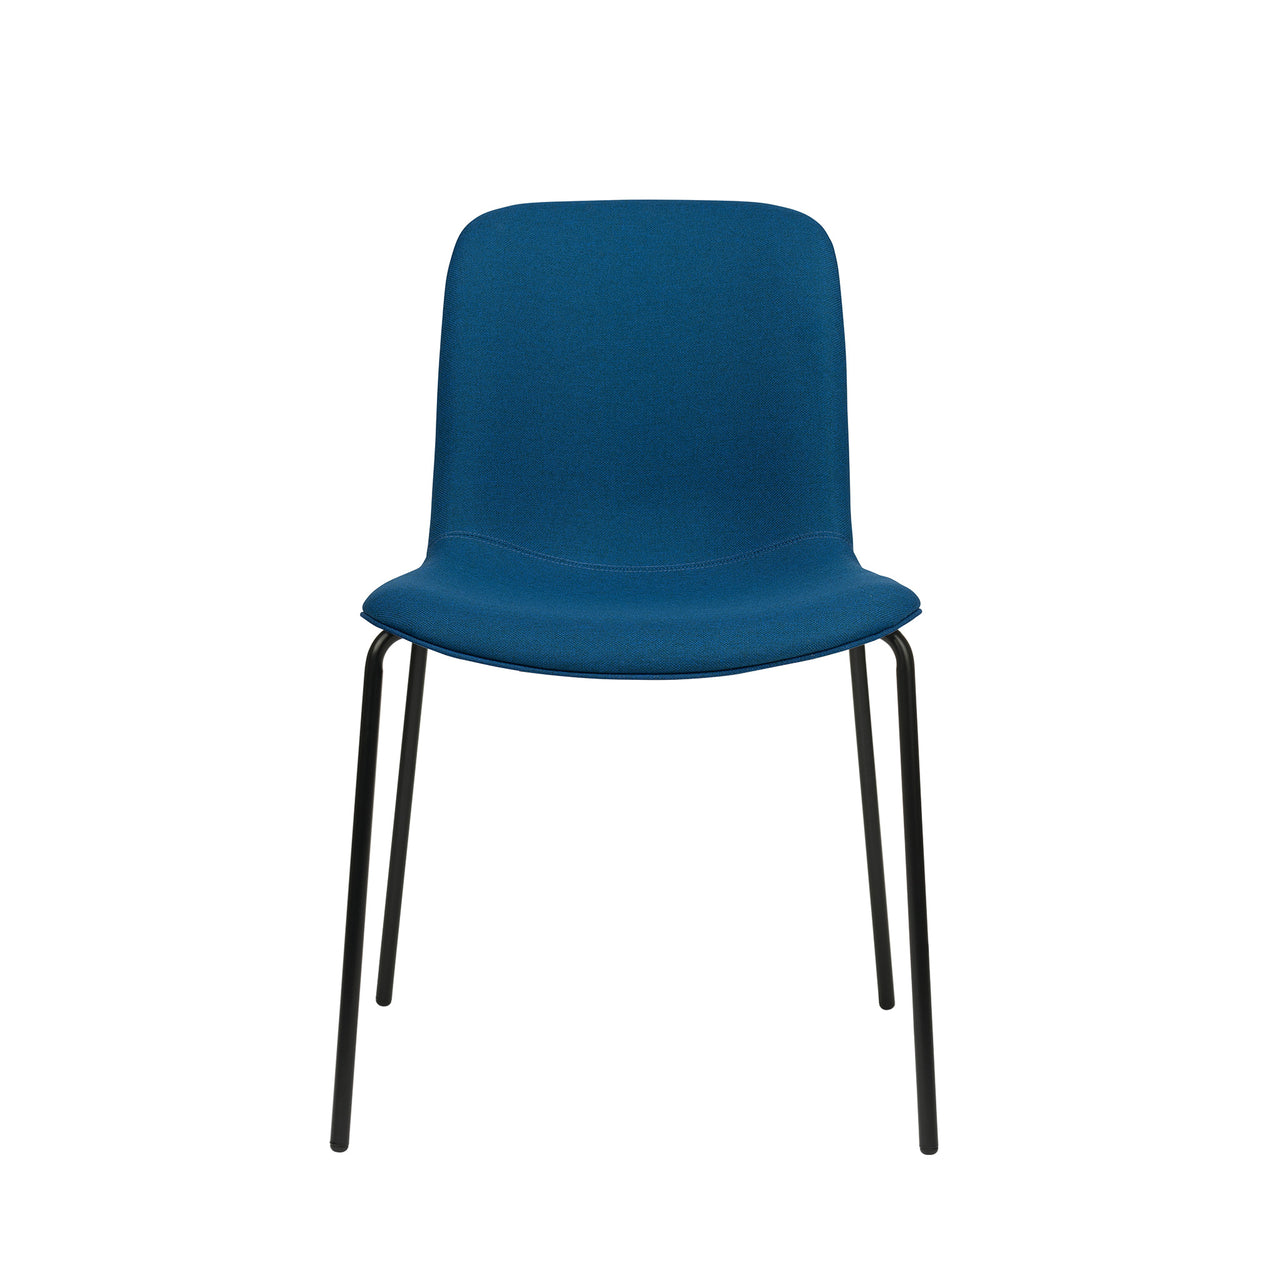 Murray Side Chairs, 4-Leg Base, Set of 2 (Blue Fabric)